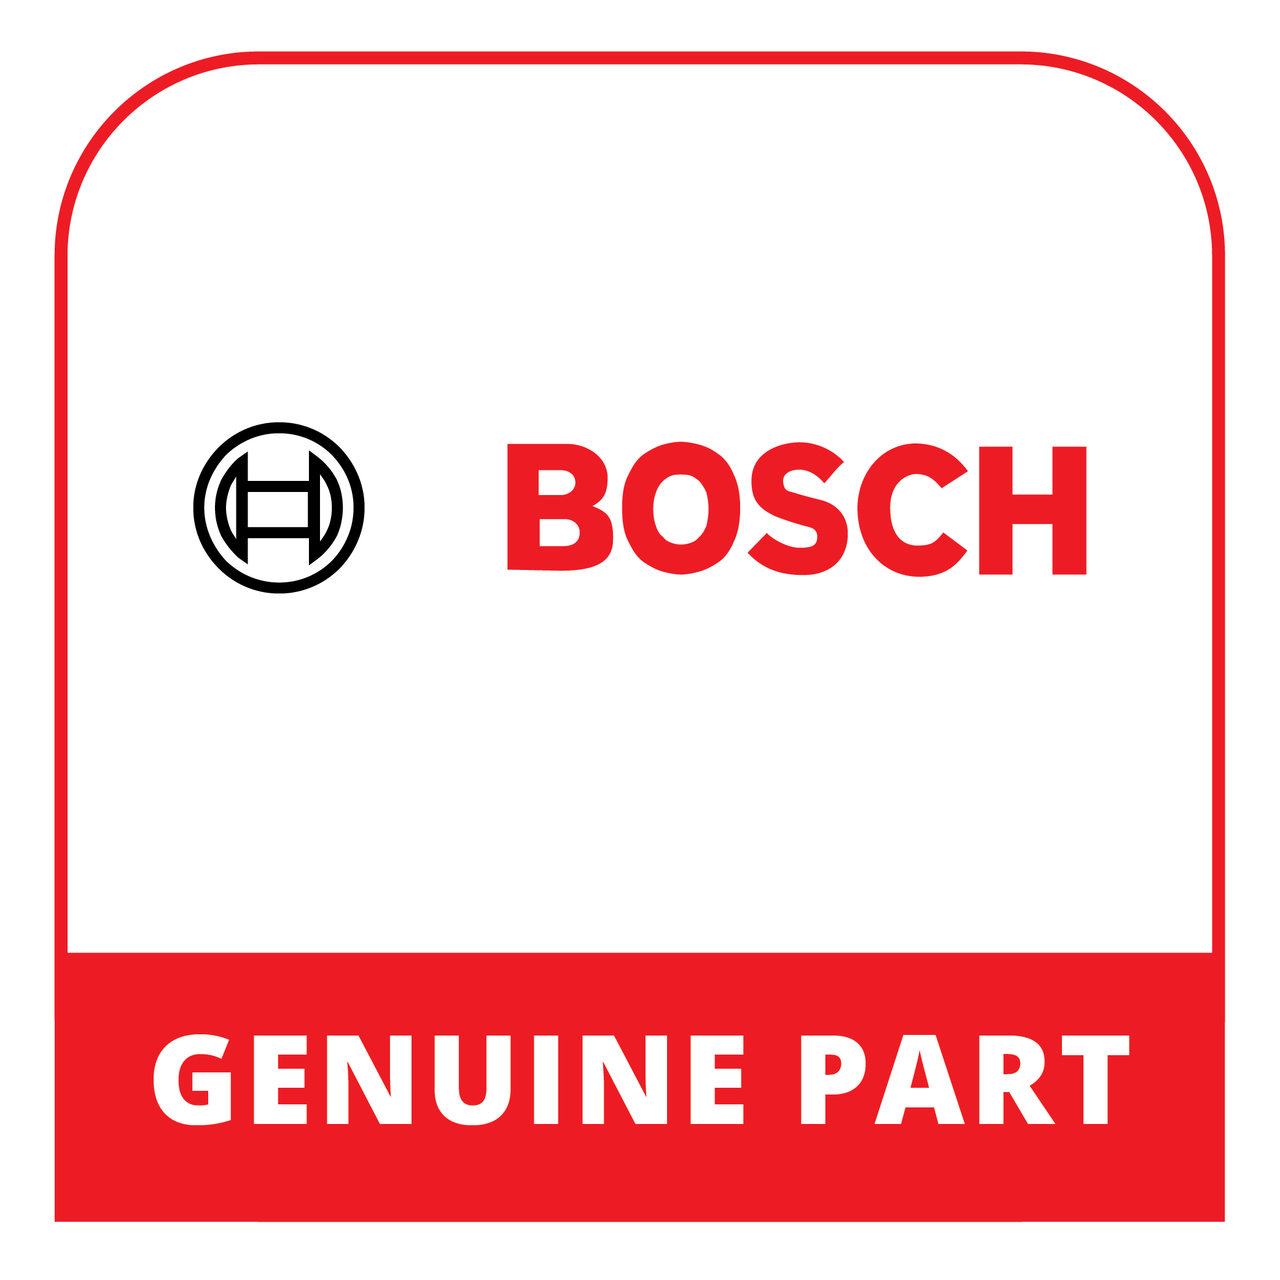 Bosch (Thermador) 10015868 - Seal - Genuine Bosch (Thermador) Part